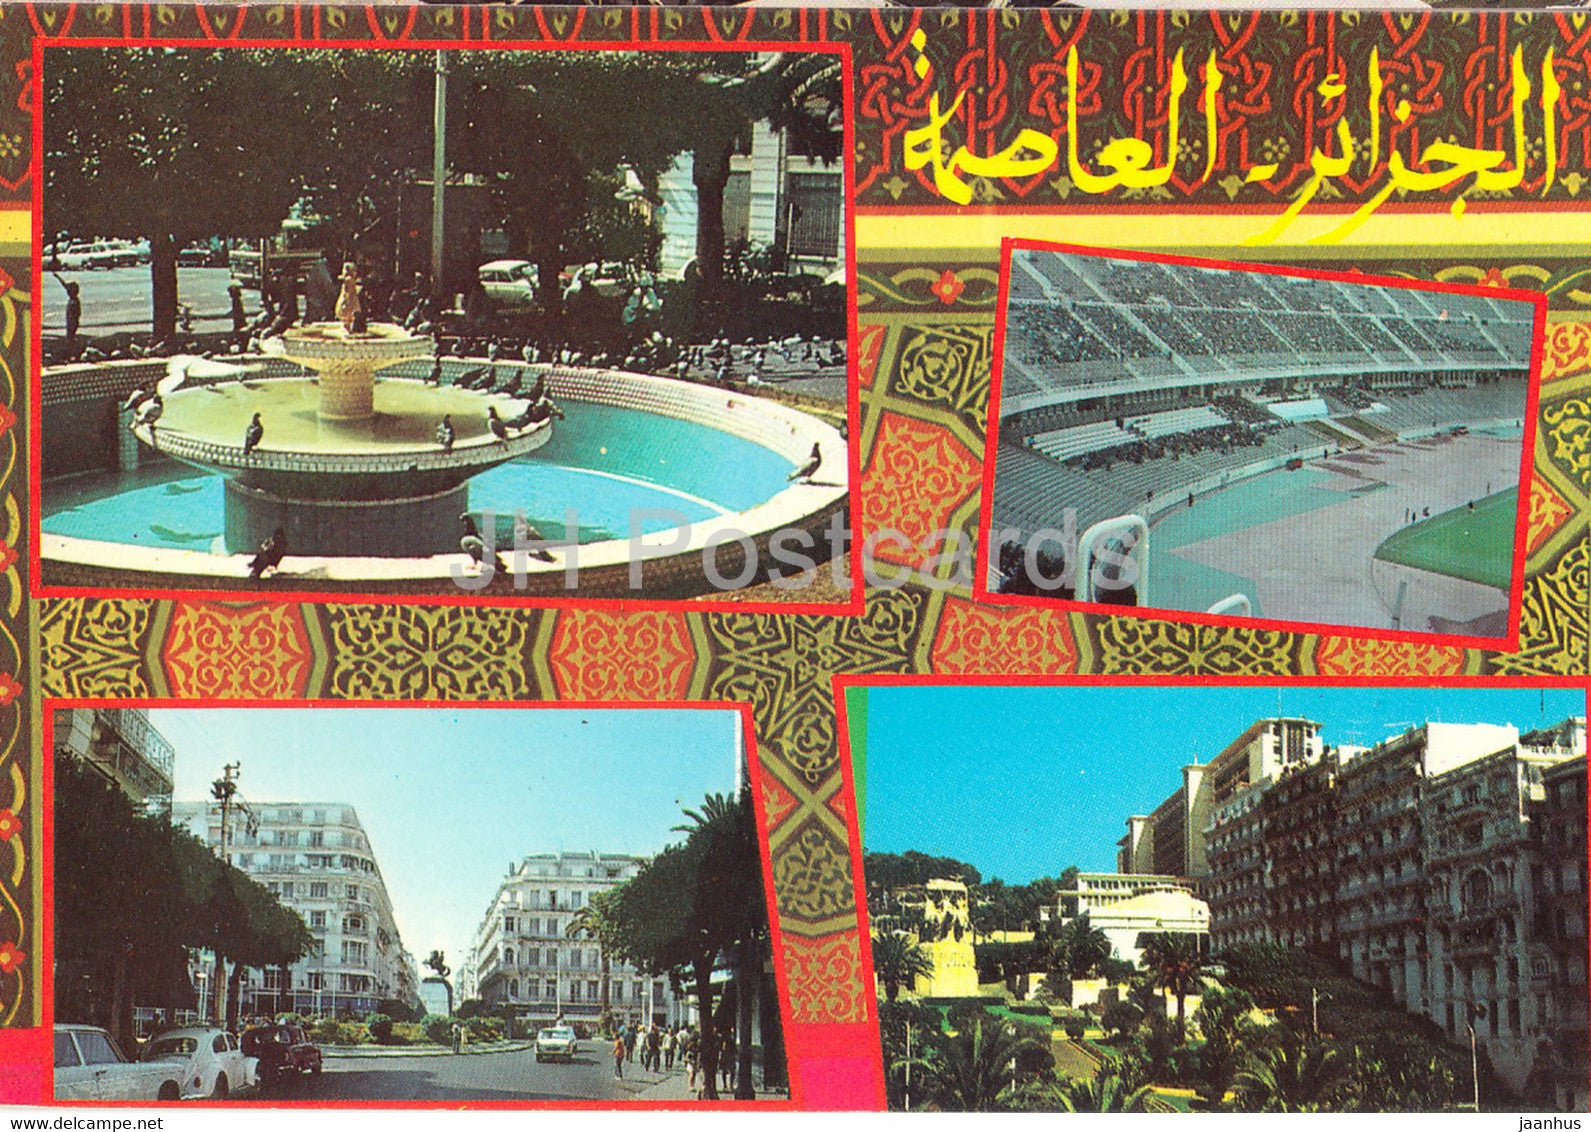 Souvenir d'Alger Blanche - stadium - street views - multiview - Algeria - unused - JH Postcards